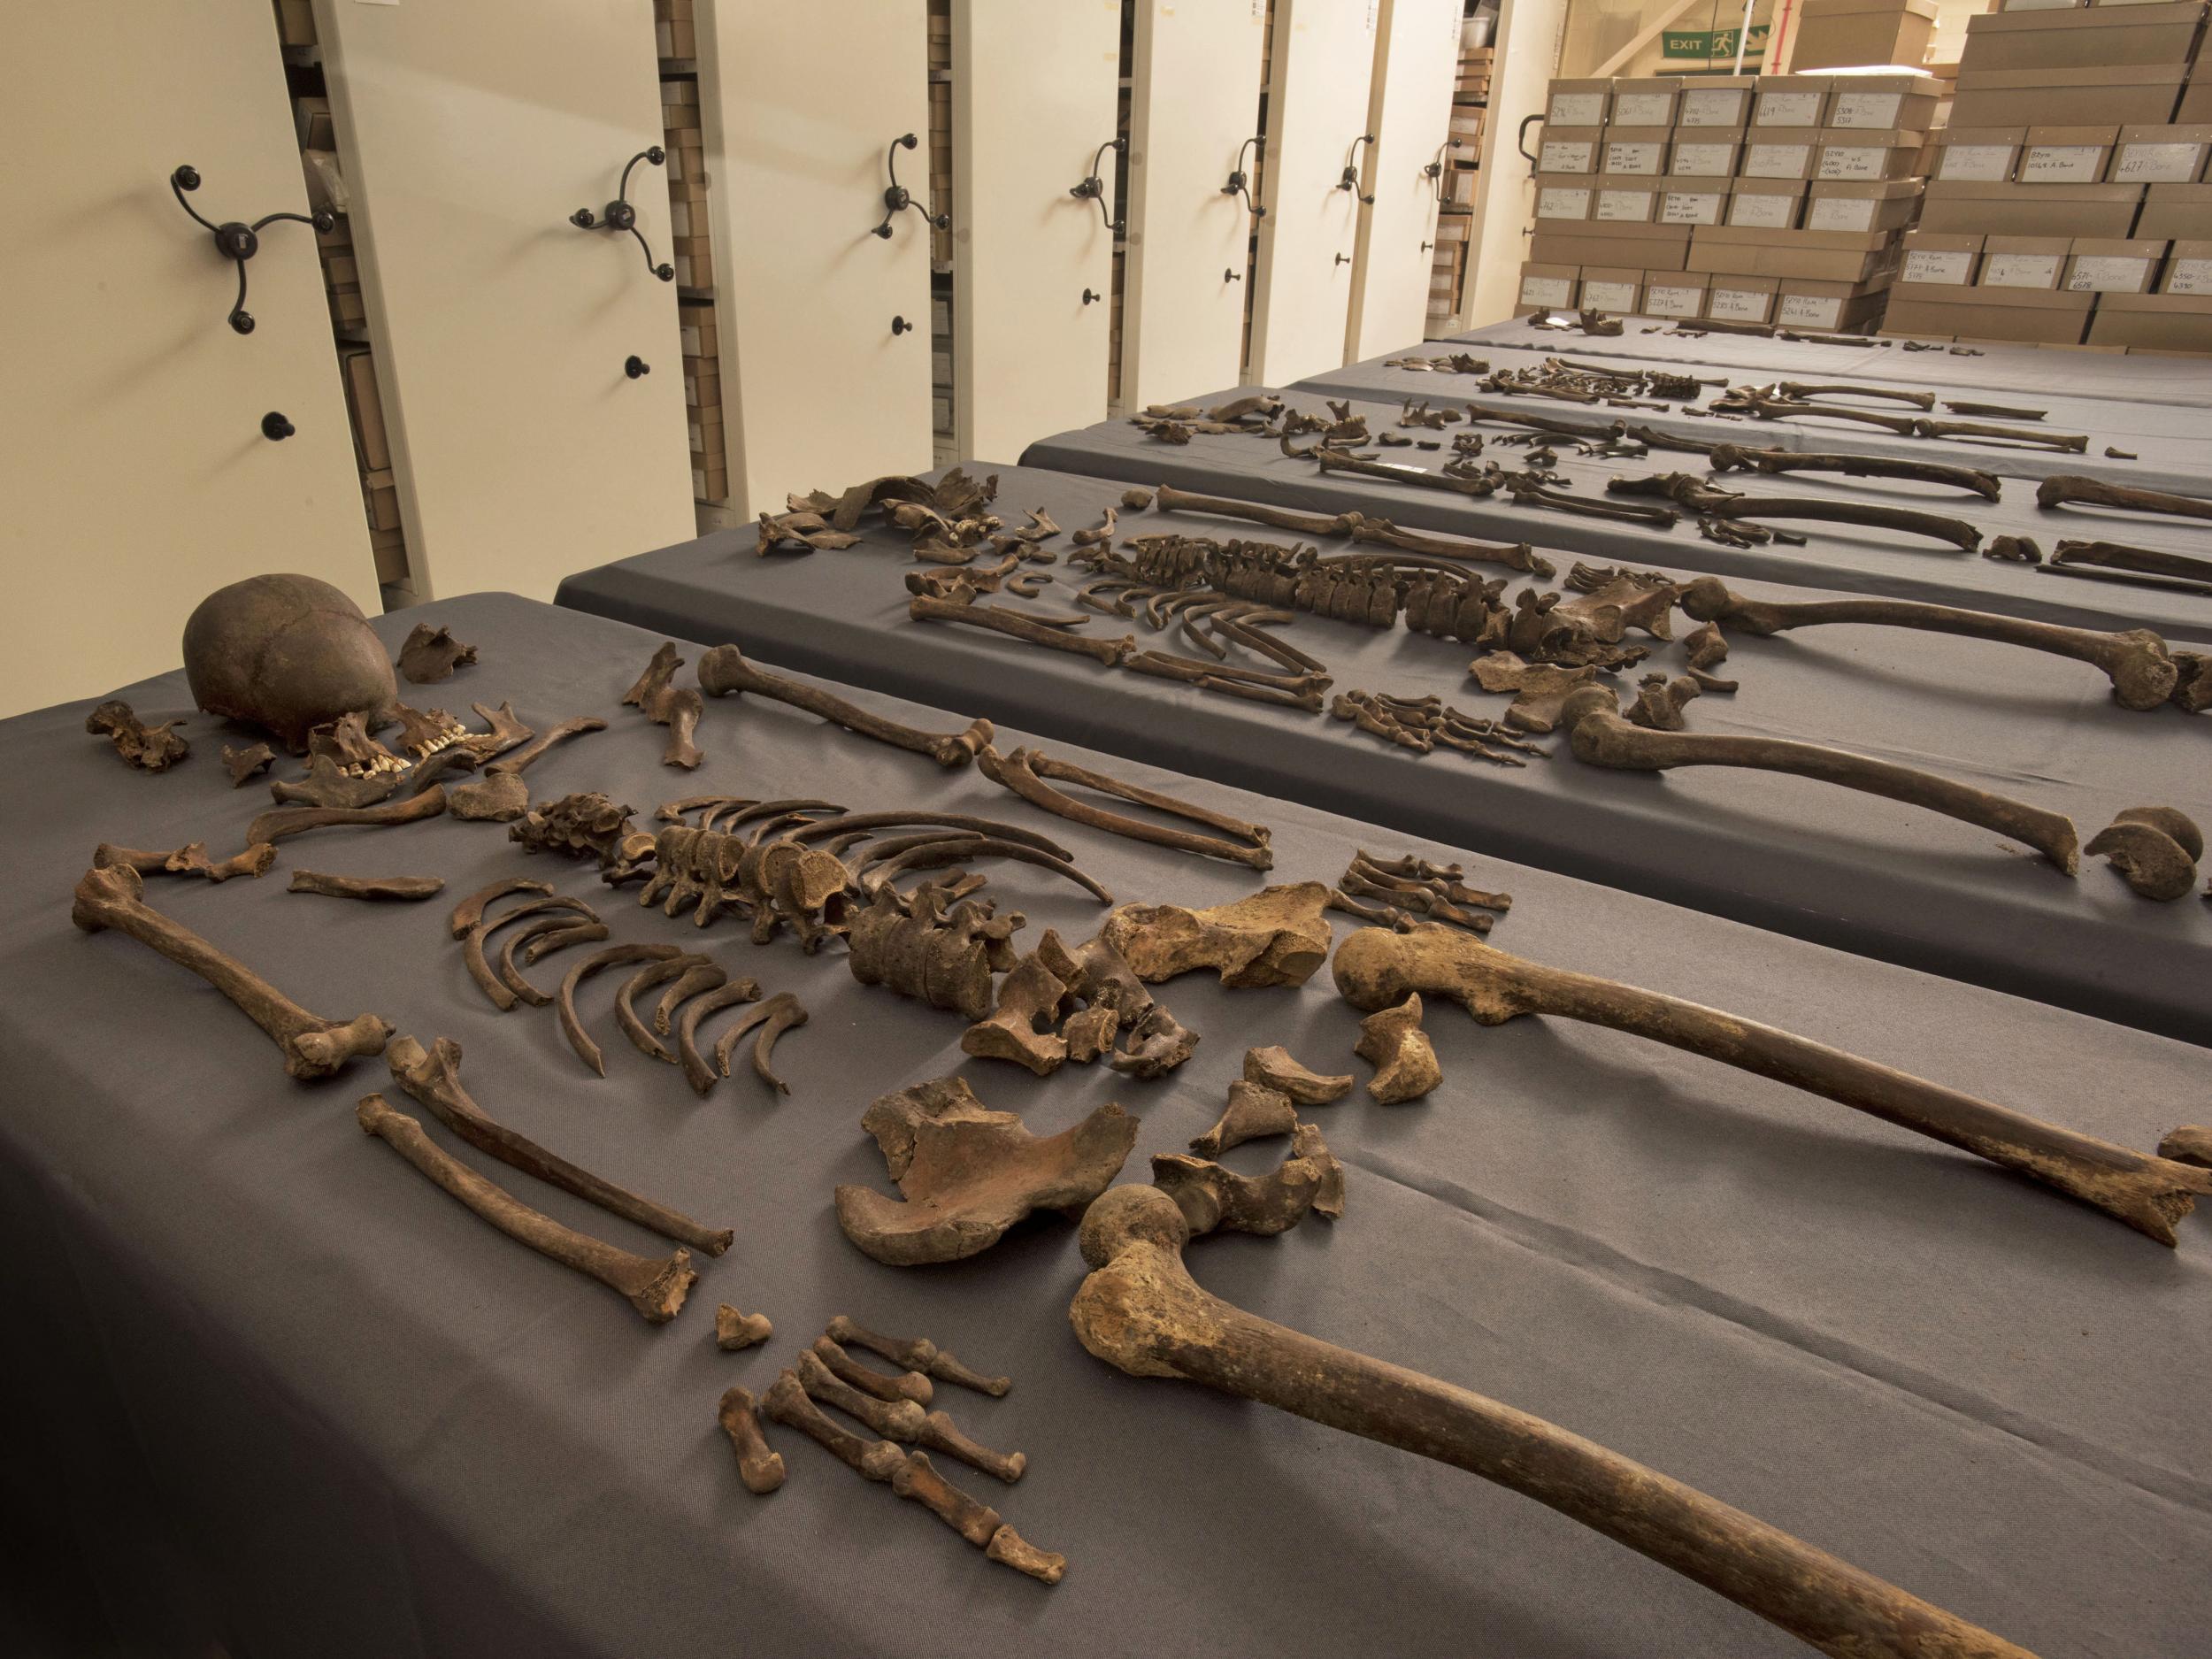 The skeletons were found to contain plague bacteria yersina pestis